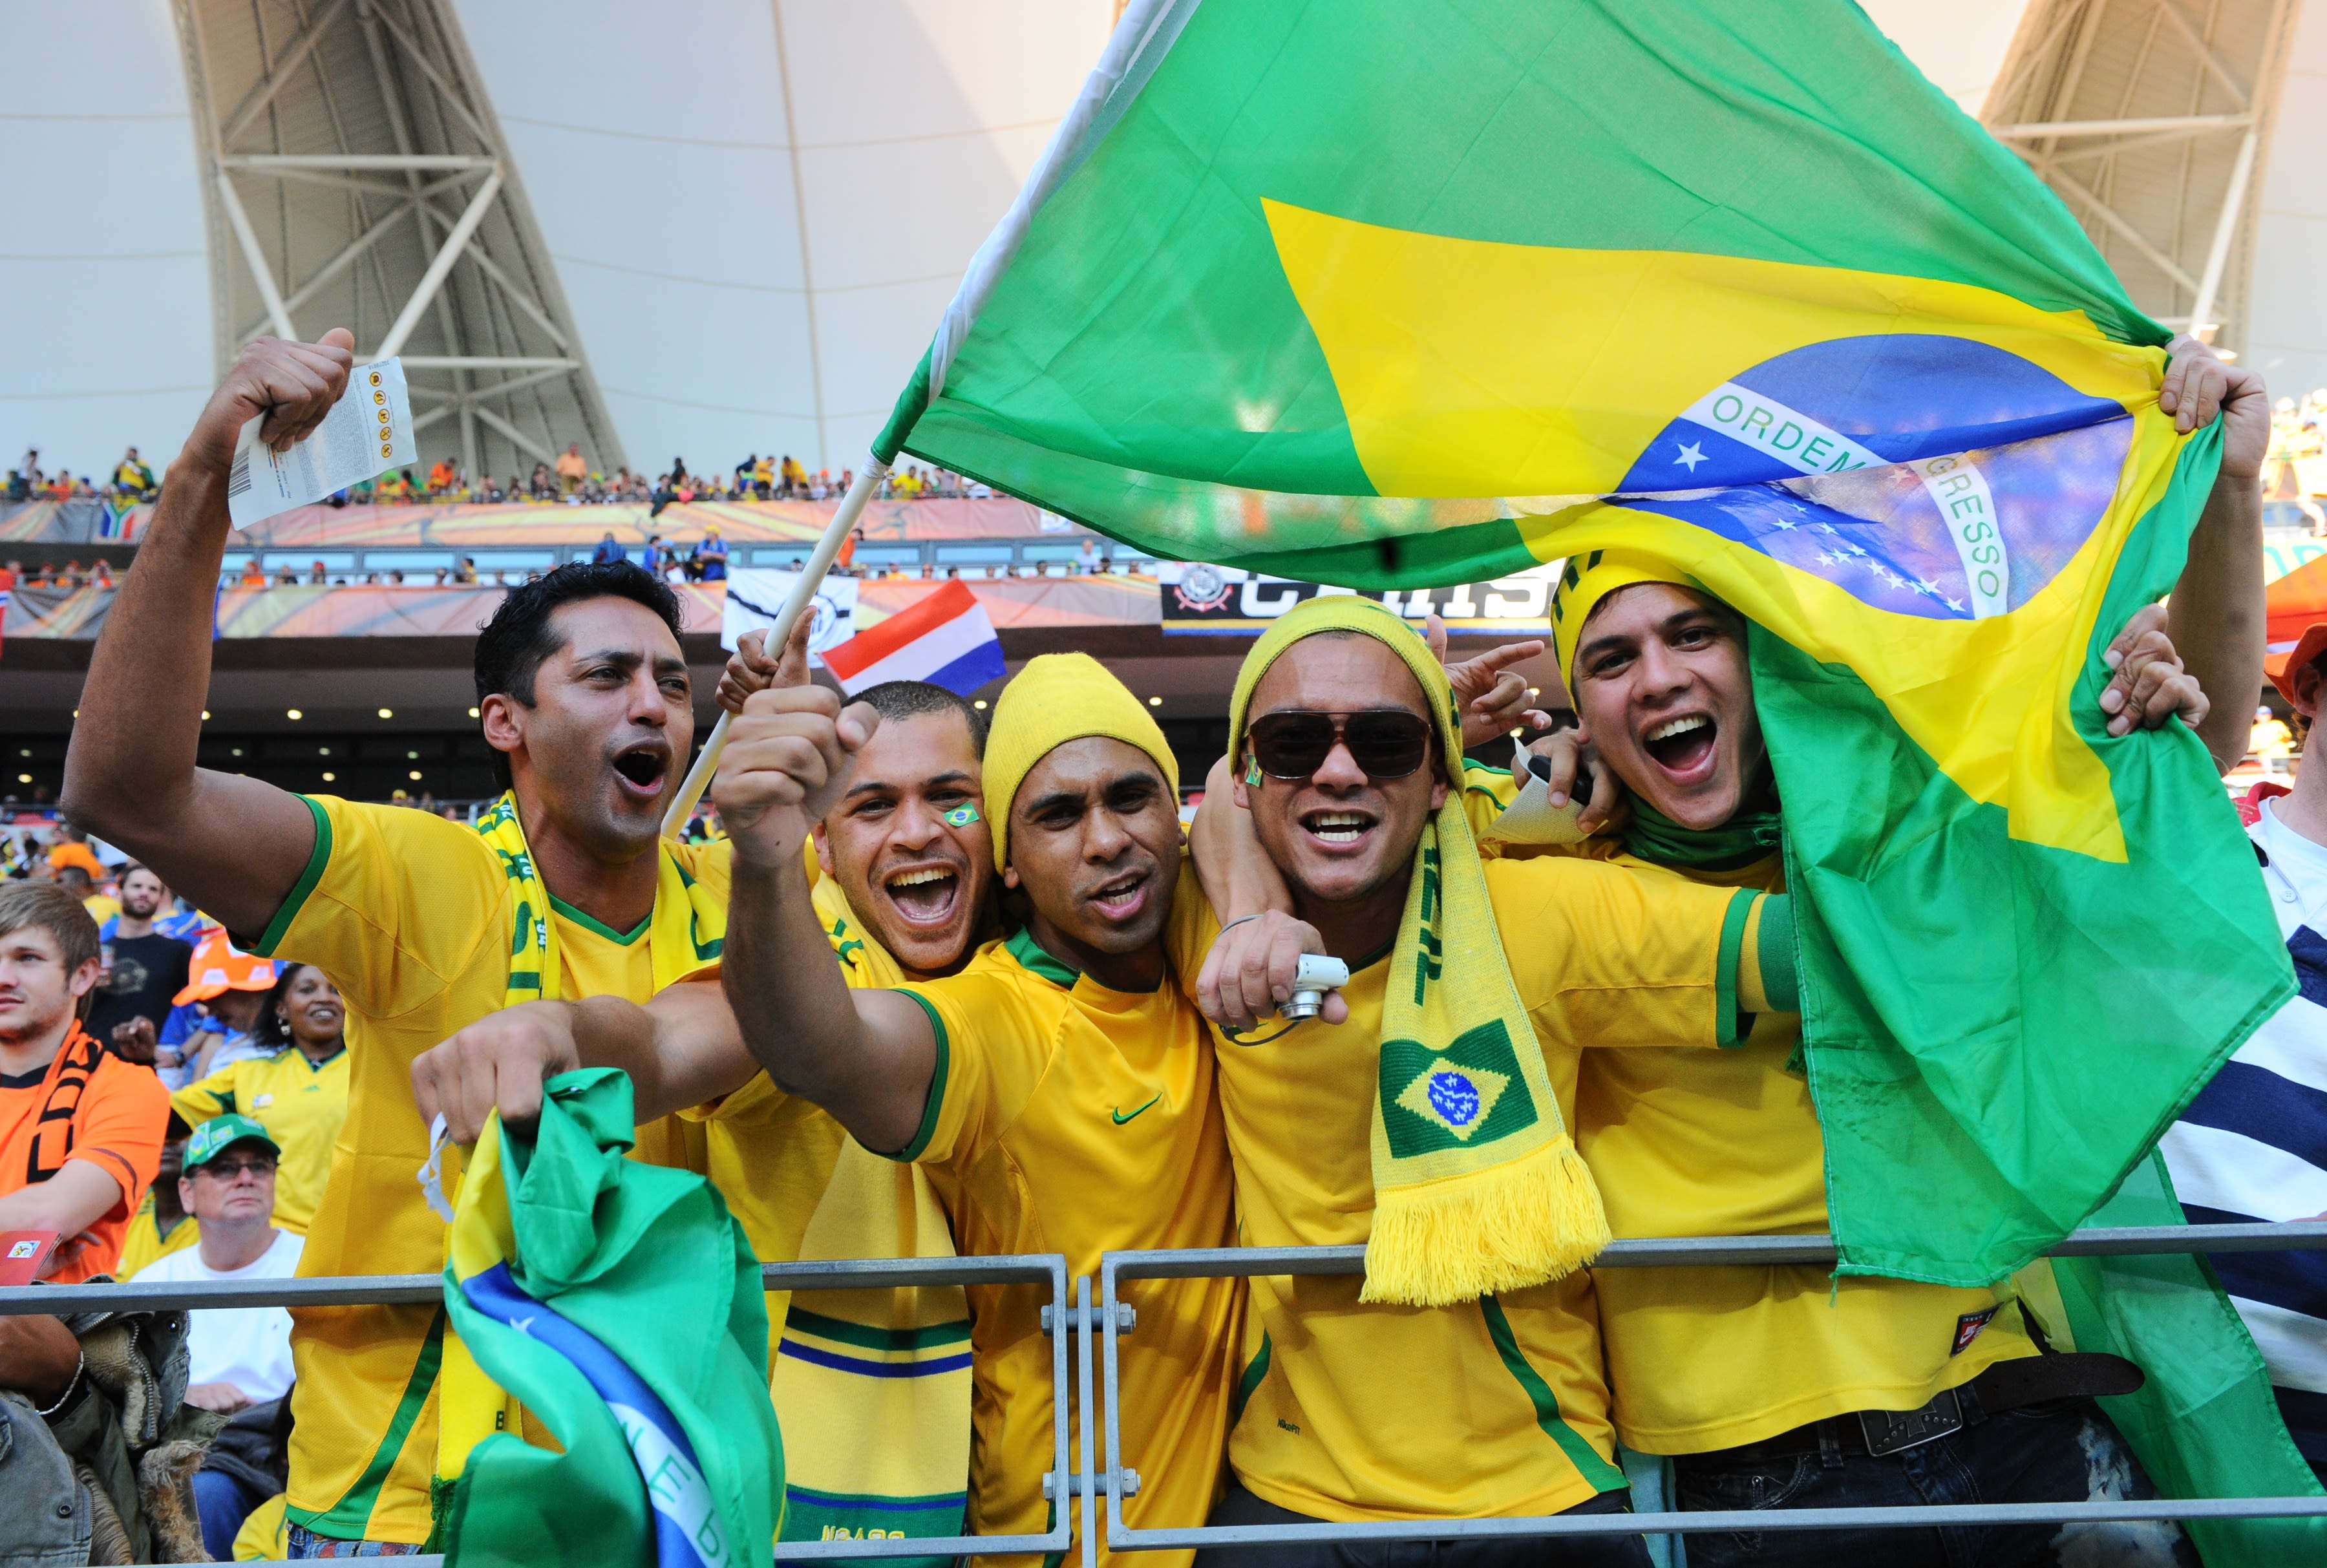 fifa sponsors brasil